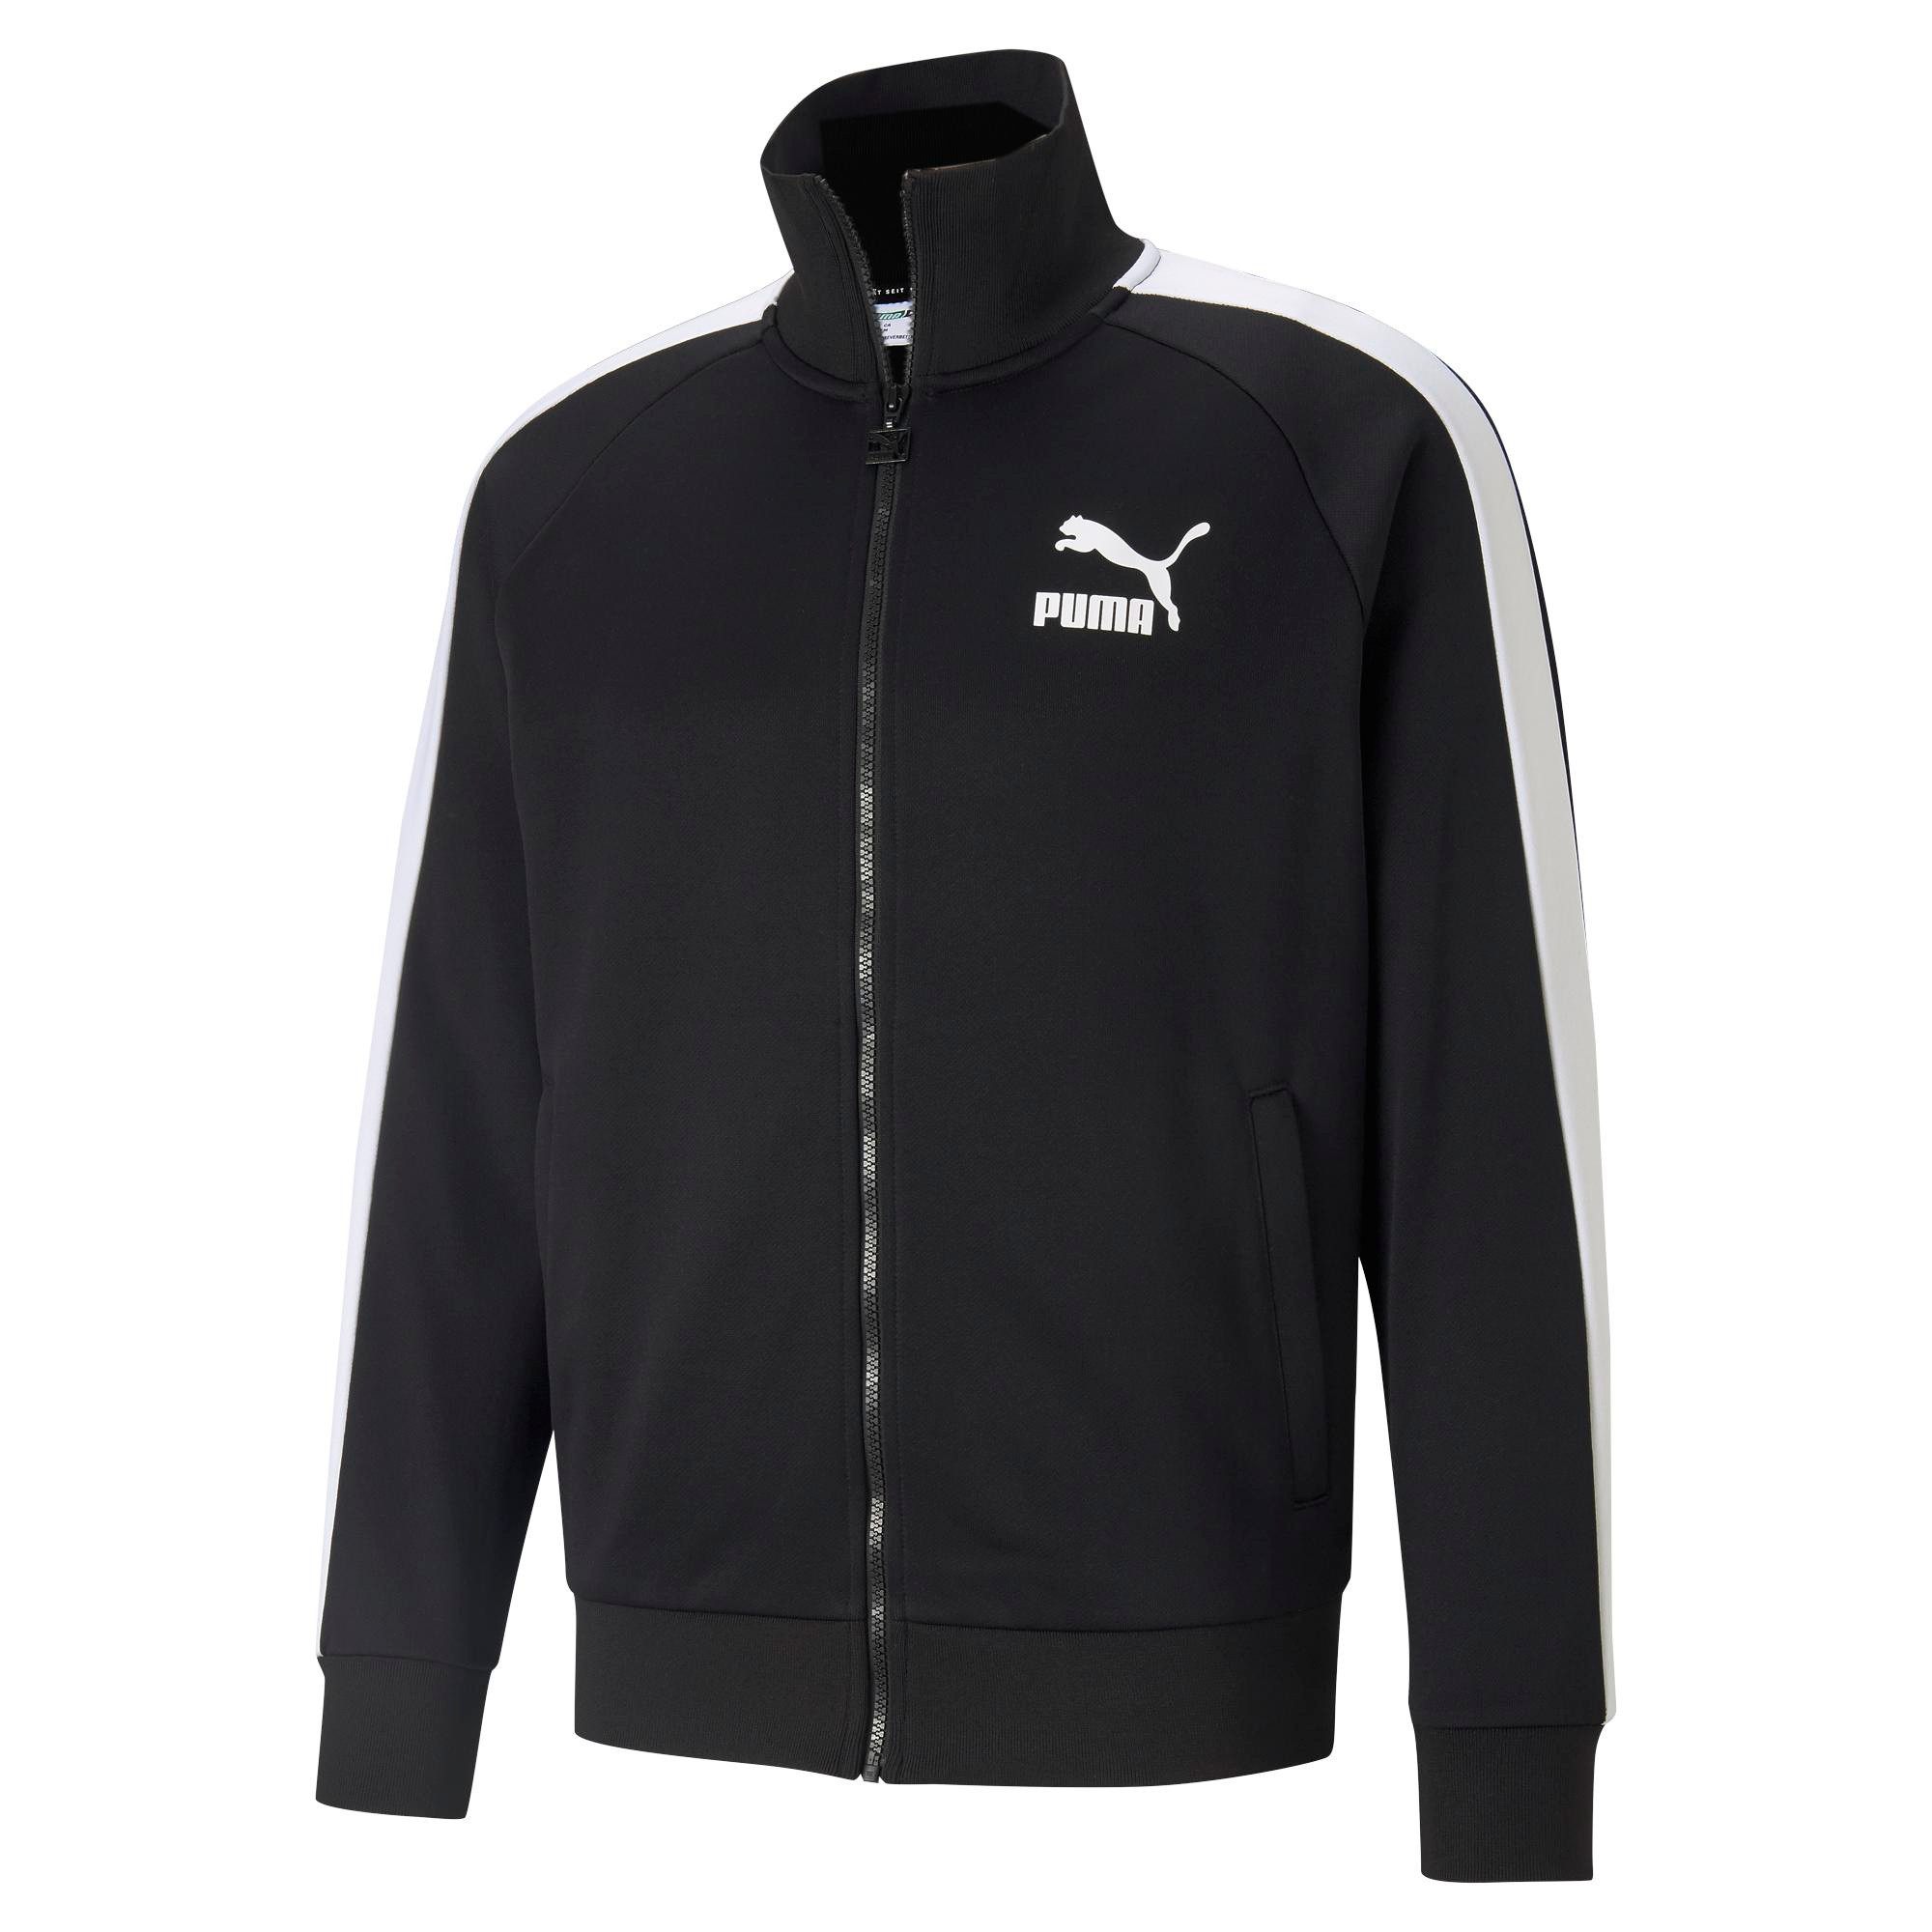 Puma - Sport jacket, Black, large image number 0